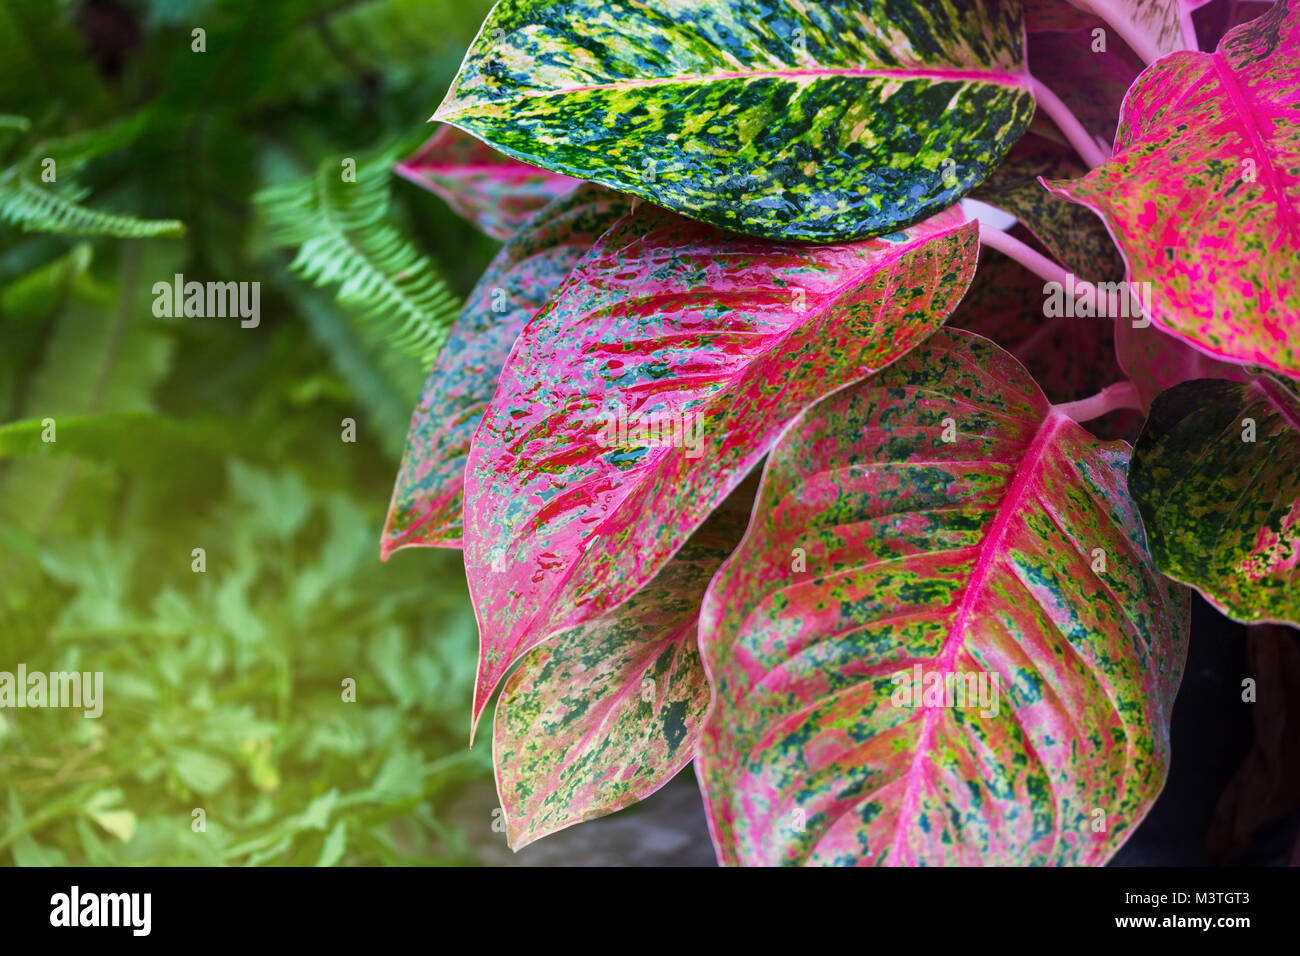 Aglaonema, Green leaf tree plant fresh nature, garden decoration Stock Photo